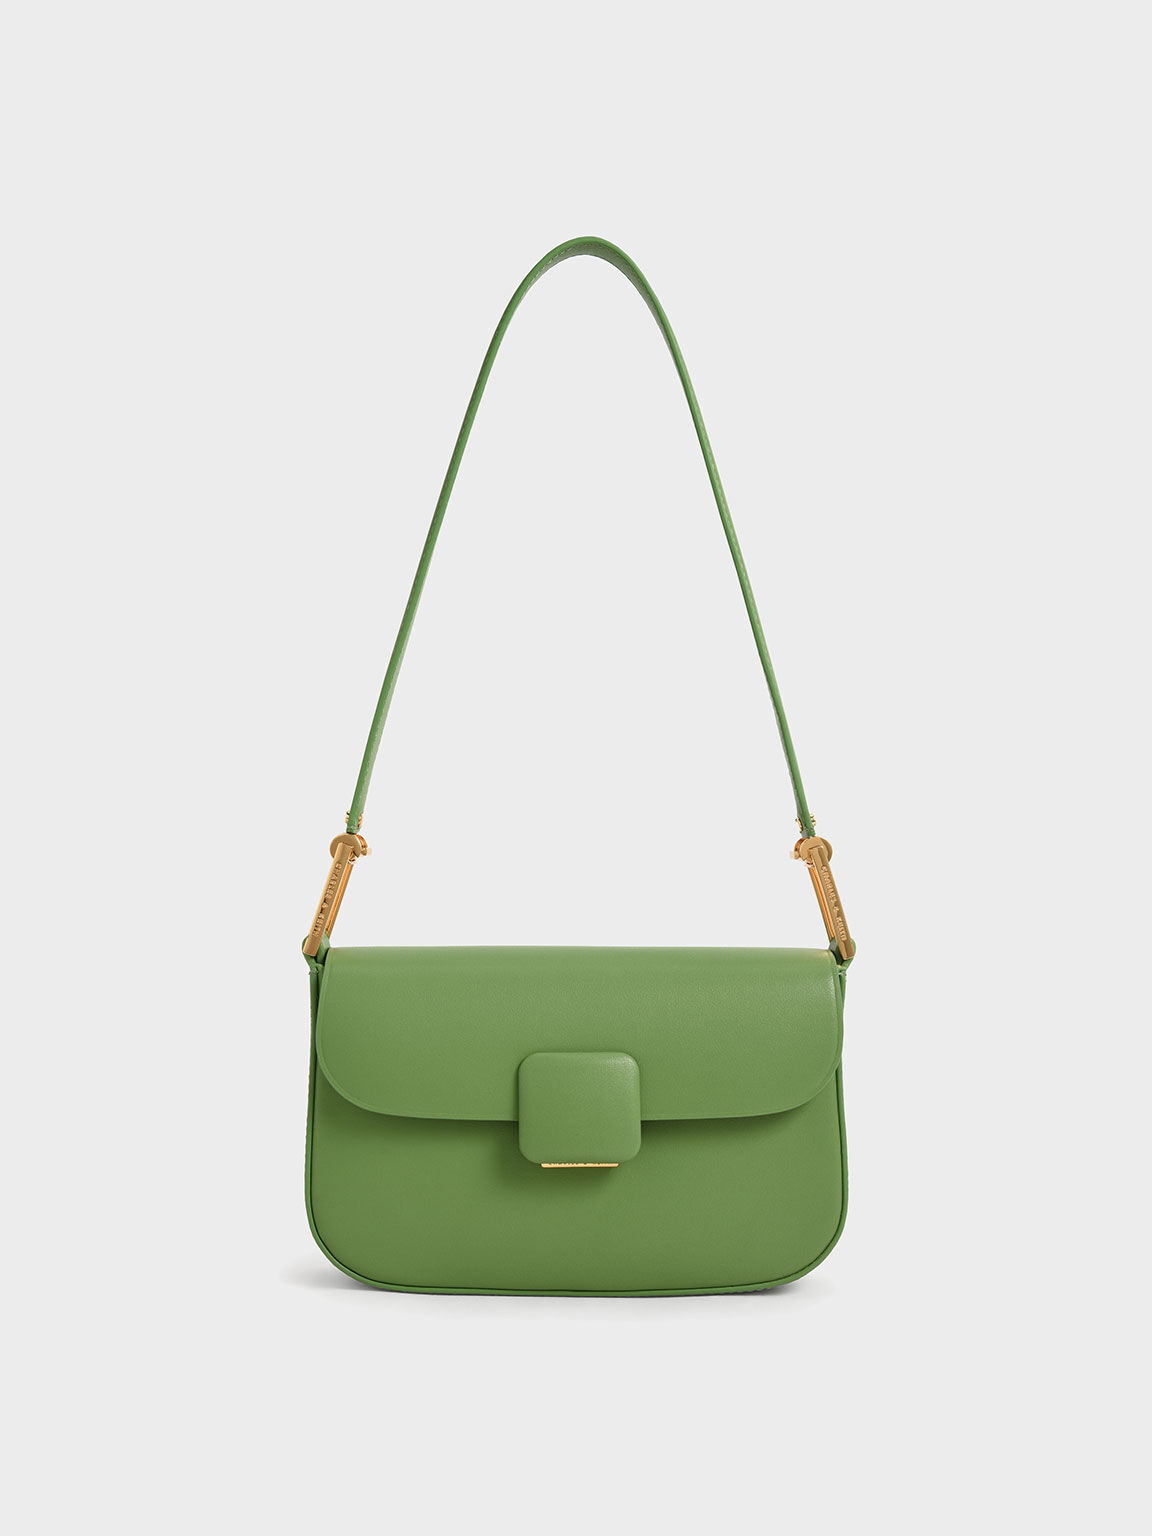 Charles & Keith - Women's Bunny Tweed Shoulder Bag, Green, M